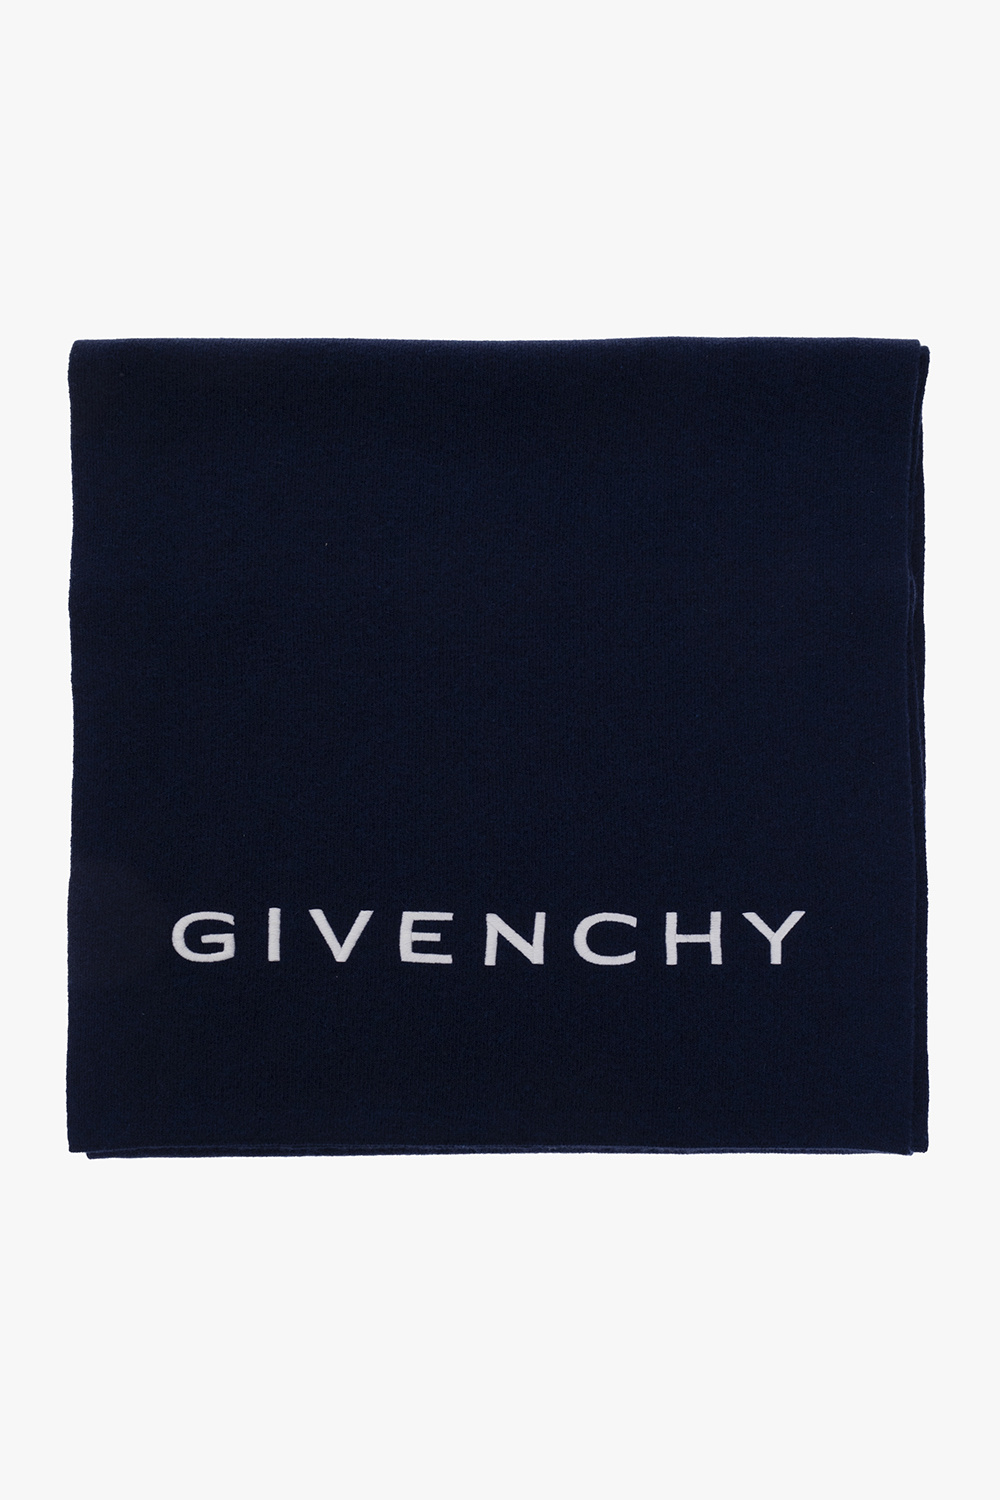 Givenchy Givenchy logo slip-on mules